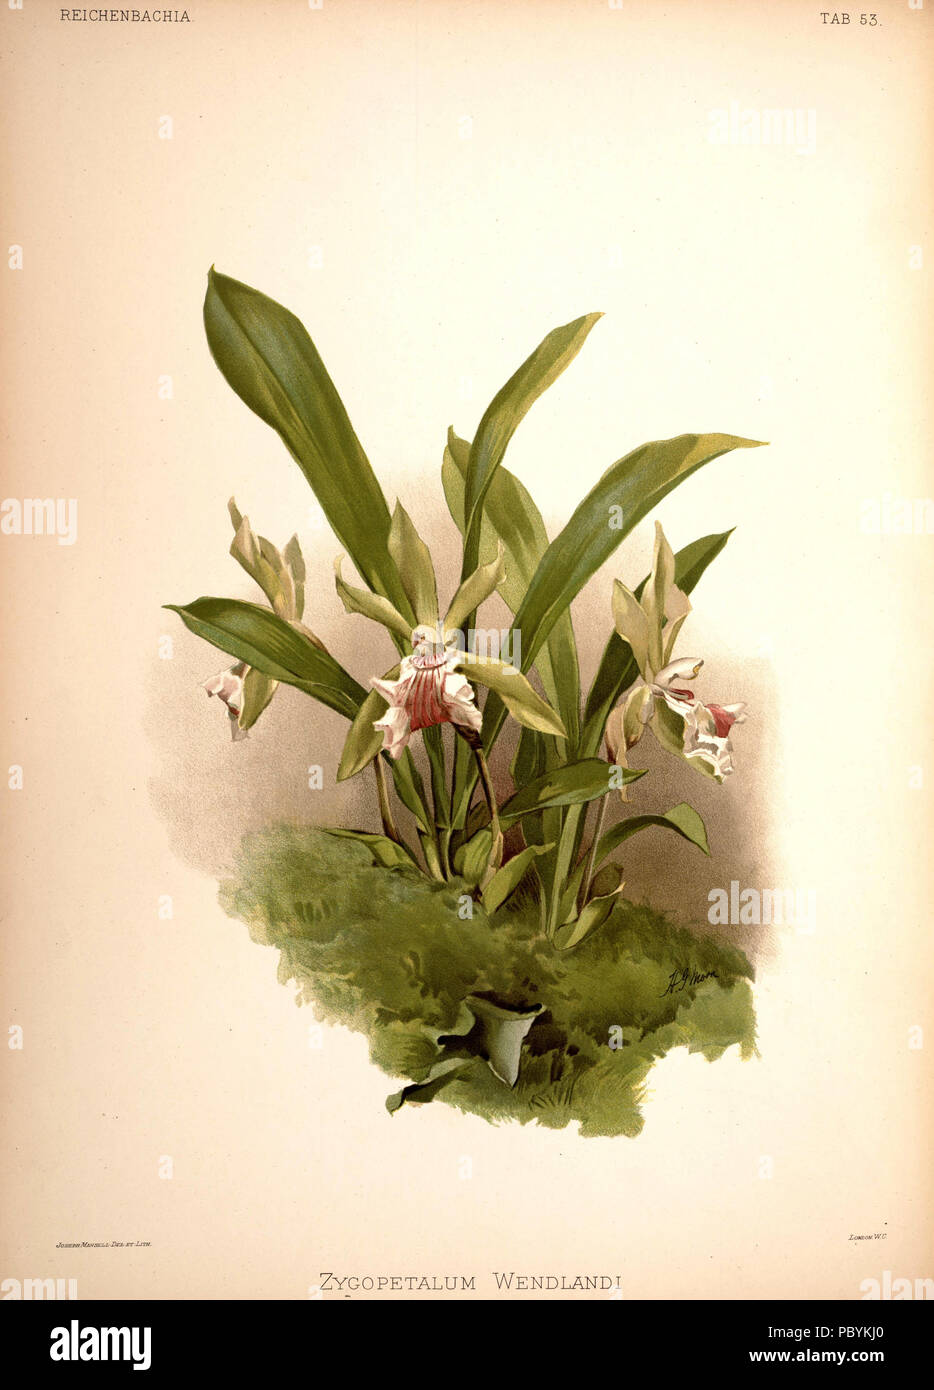 220 Frederick Sander - Reichenbachia II plate 53 (1890) - Zygopetalum wendlandi Stock Photo